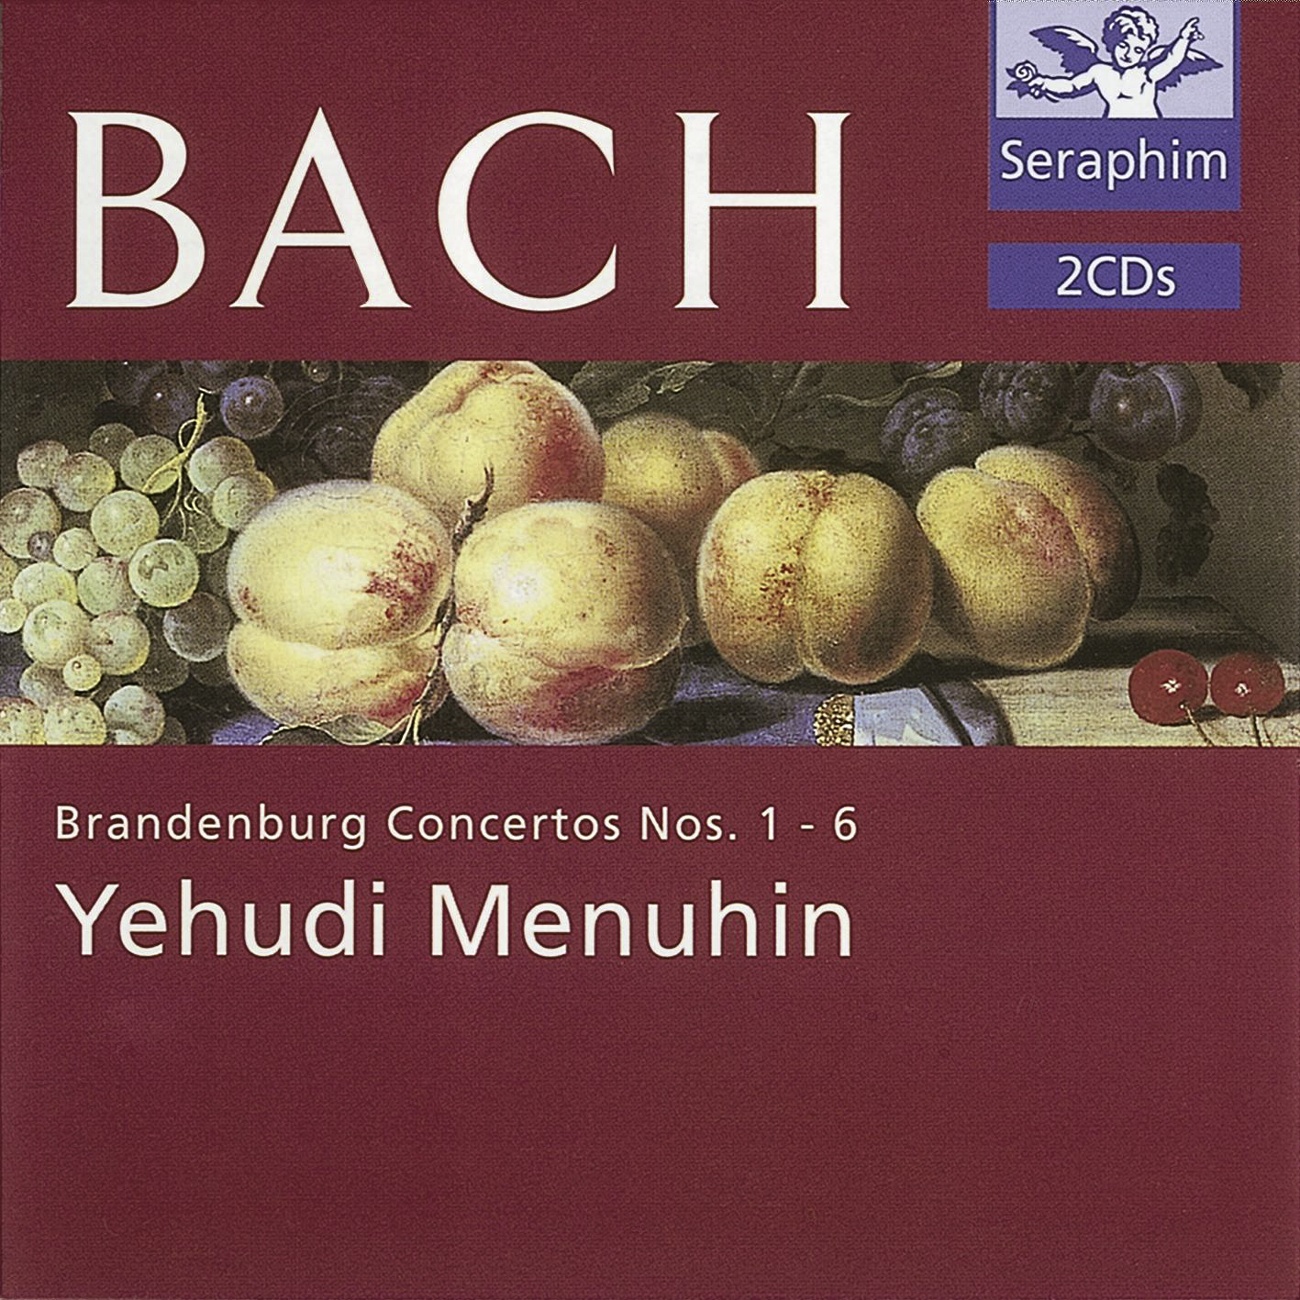 Brandenburg Concerto No. 4 in G BWV1049 (1989 Digital Remaster): I.       Allegro